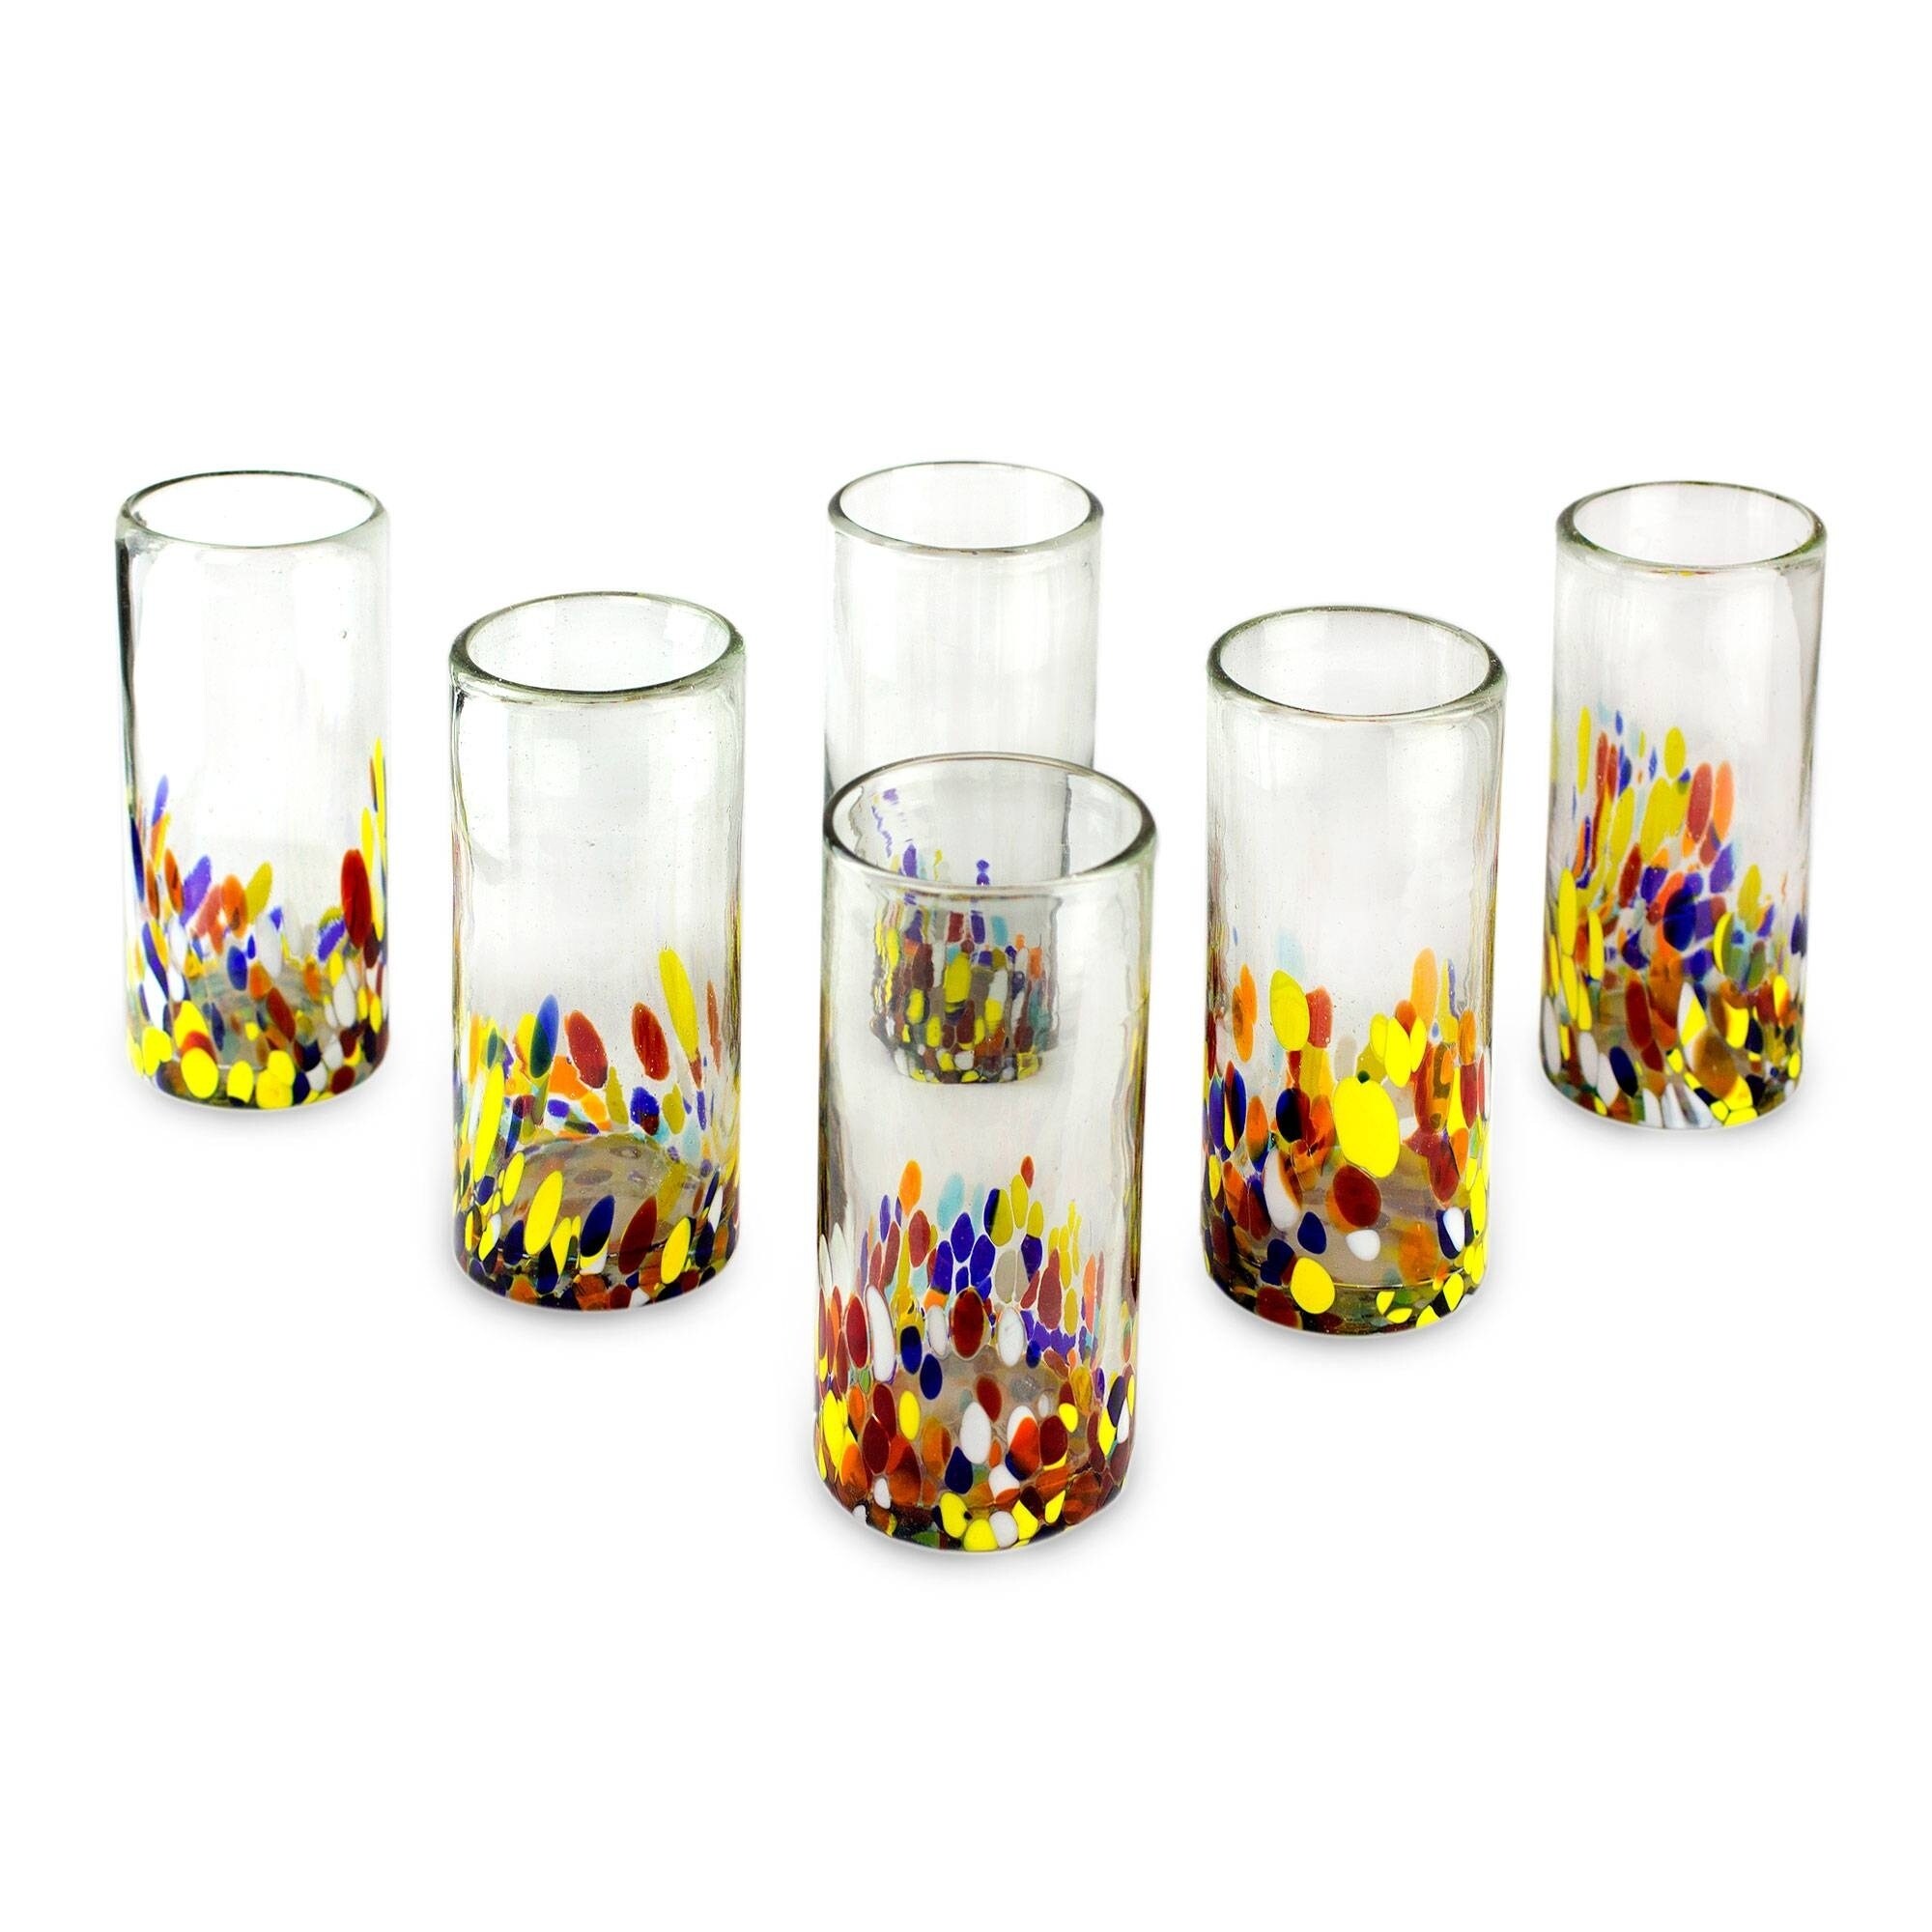 https://ak1.ostkcdn.com/images/products/5478309/Handmade-Confetti-Multicolor-Bright-Highball-Set-of-6-Glasses-Mexico-3.2-x-6.75-4ee14203-e0e3-4e8e-bae8-8d2b7f904f50.jpg